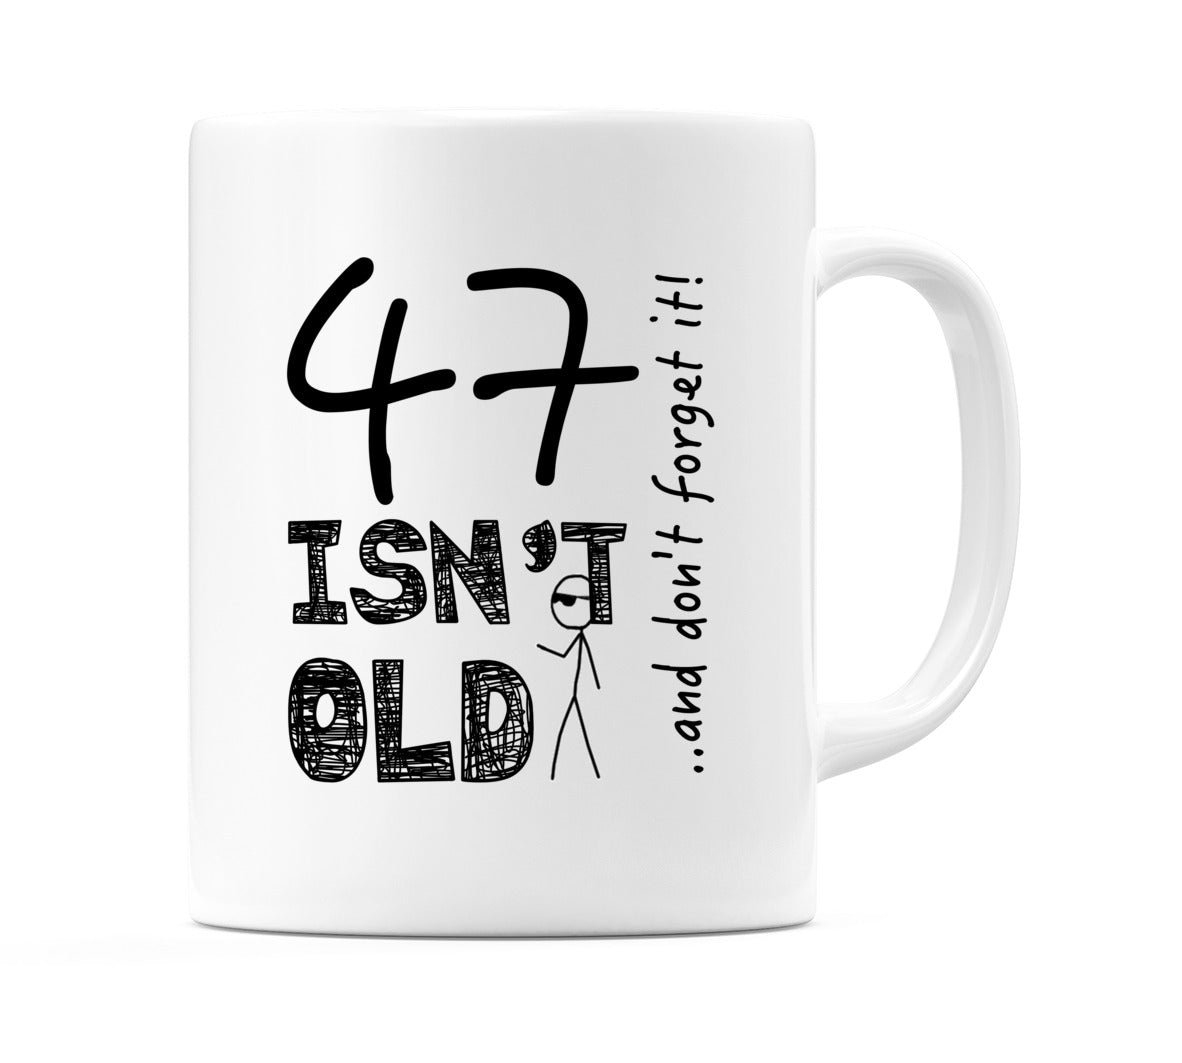 47 Isn't Old Mug